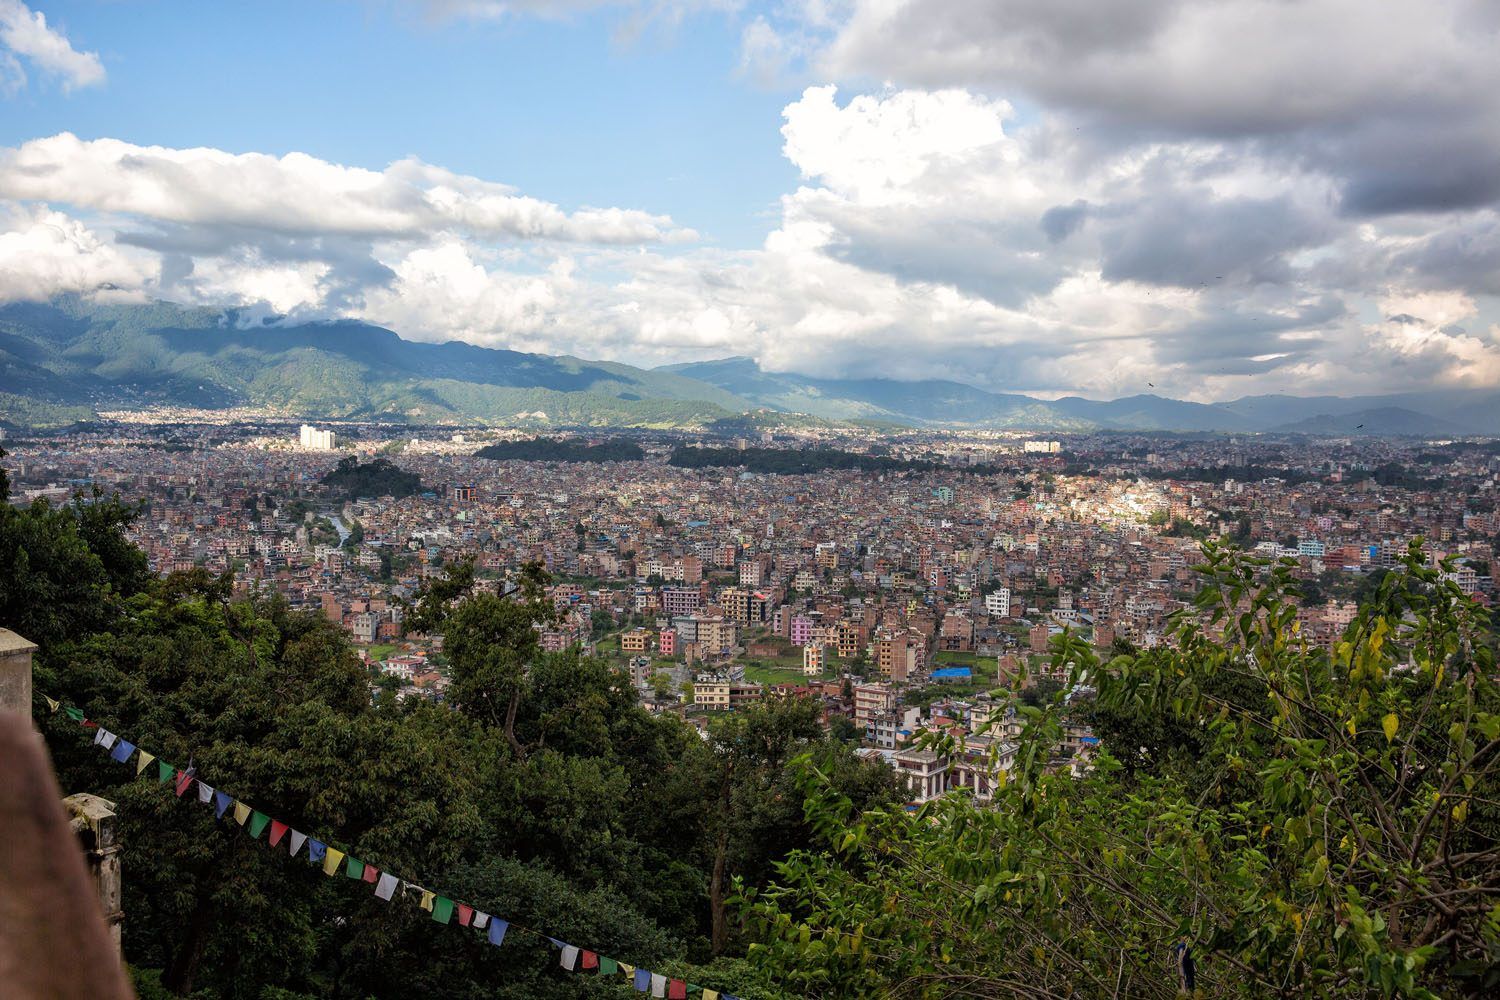 This is Kathmandu